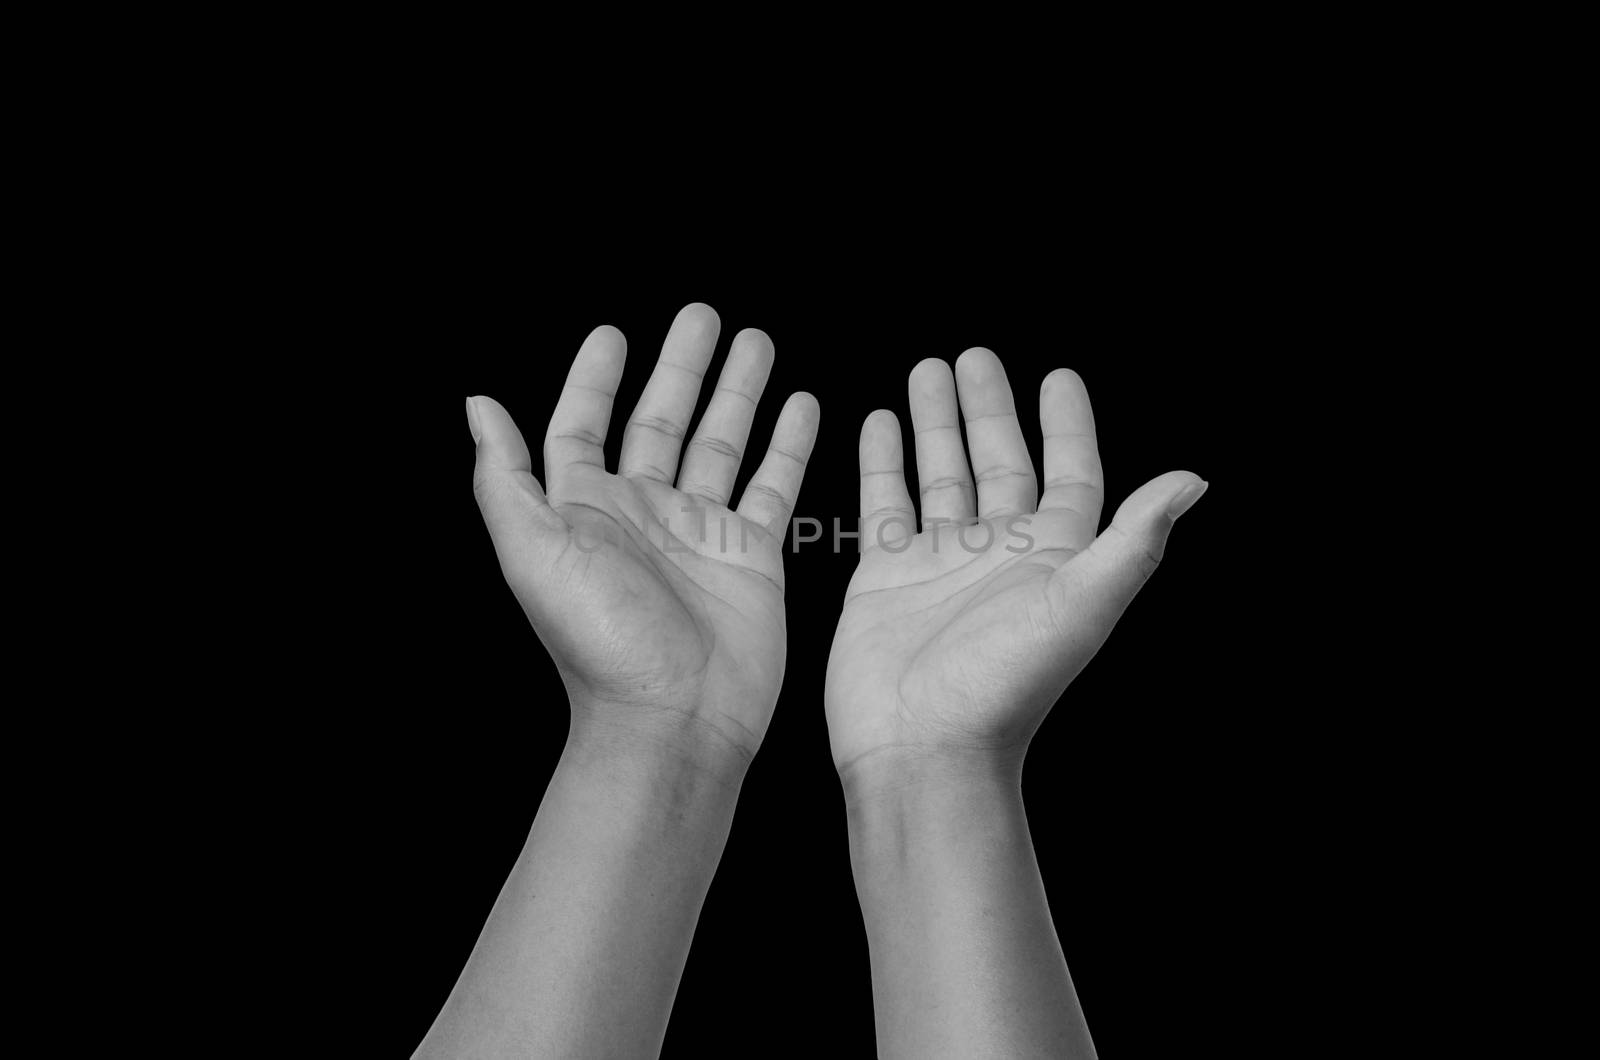 Open hands on black background by photobyphotoboy